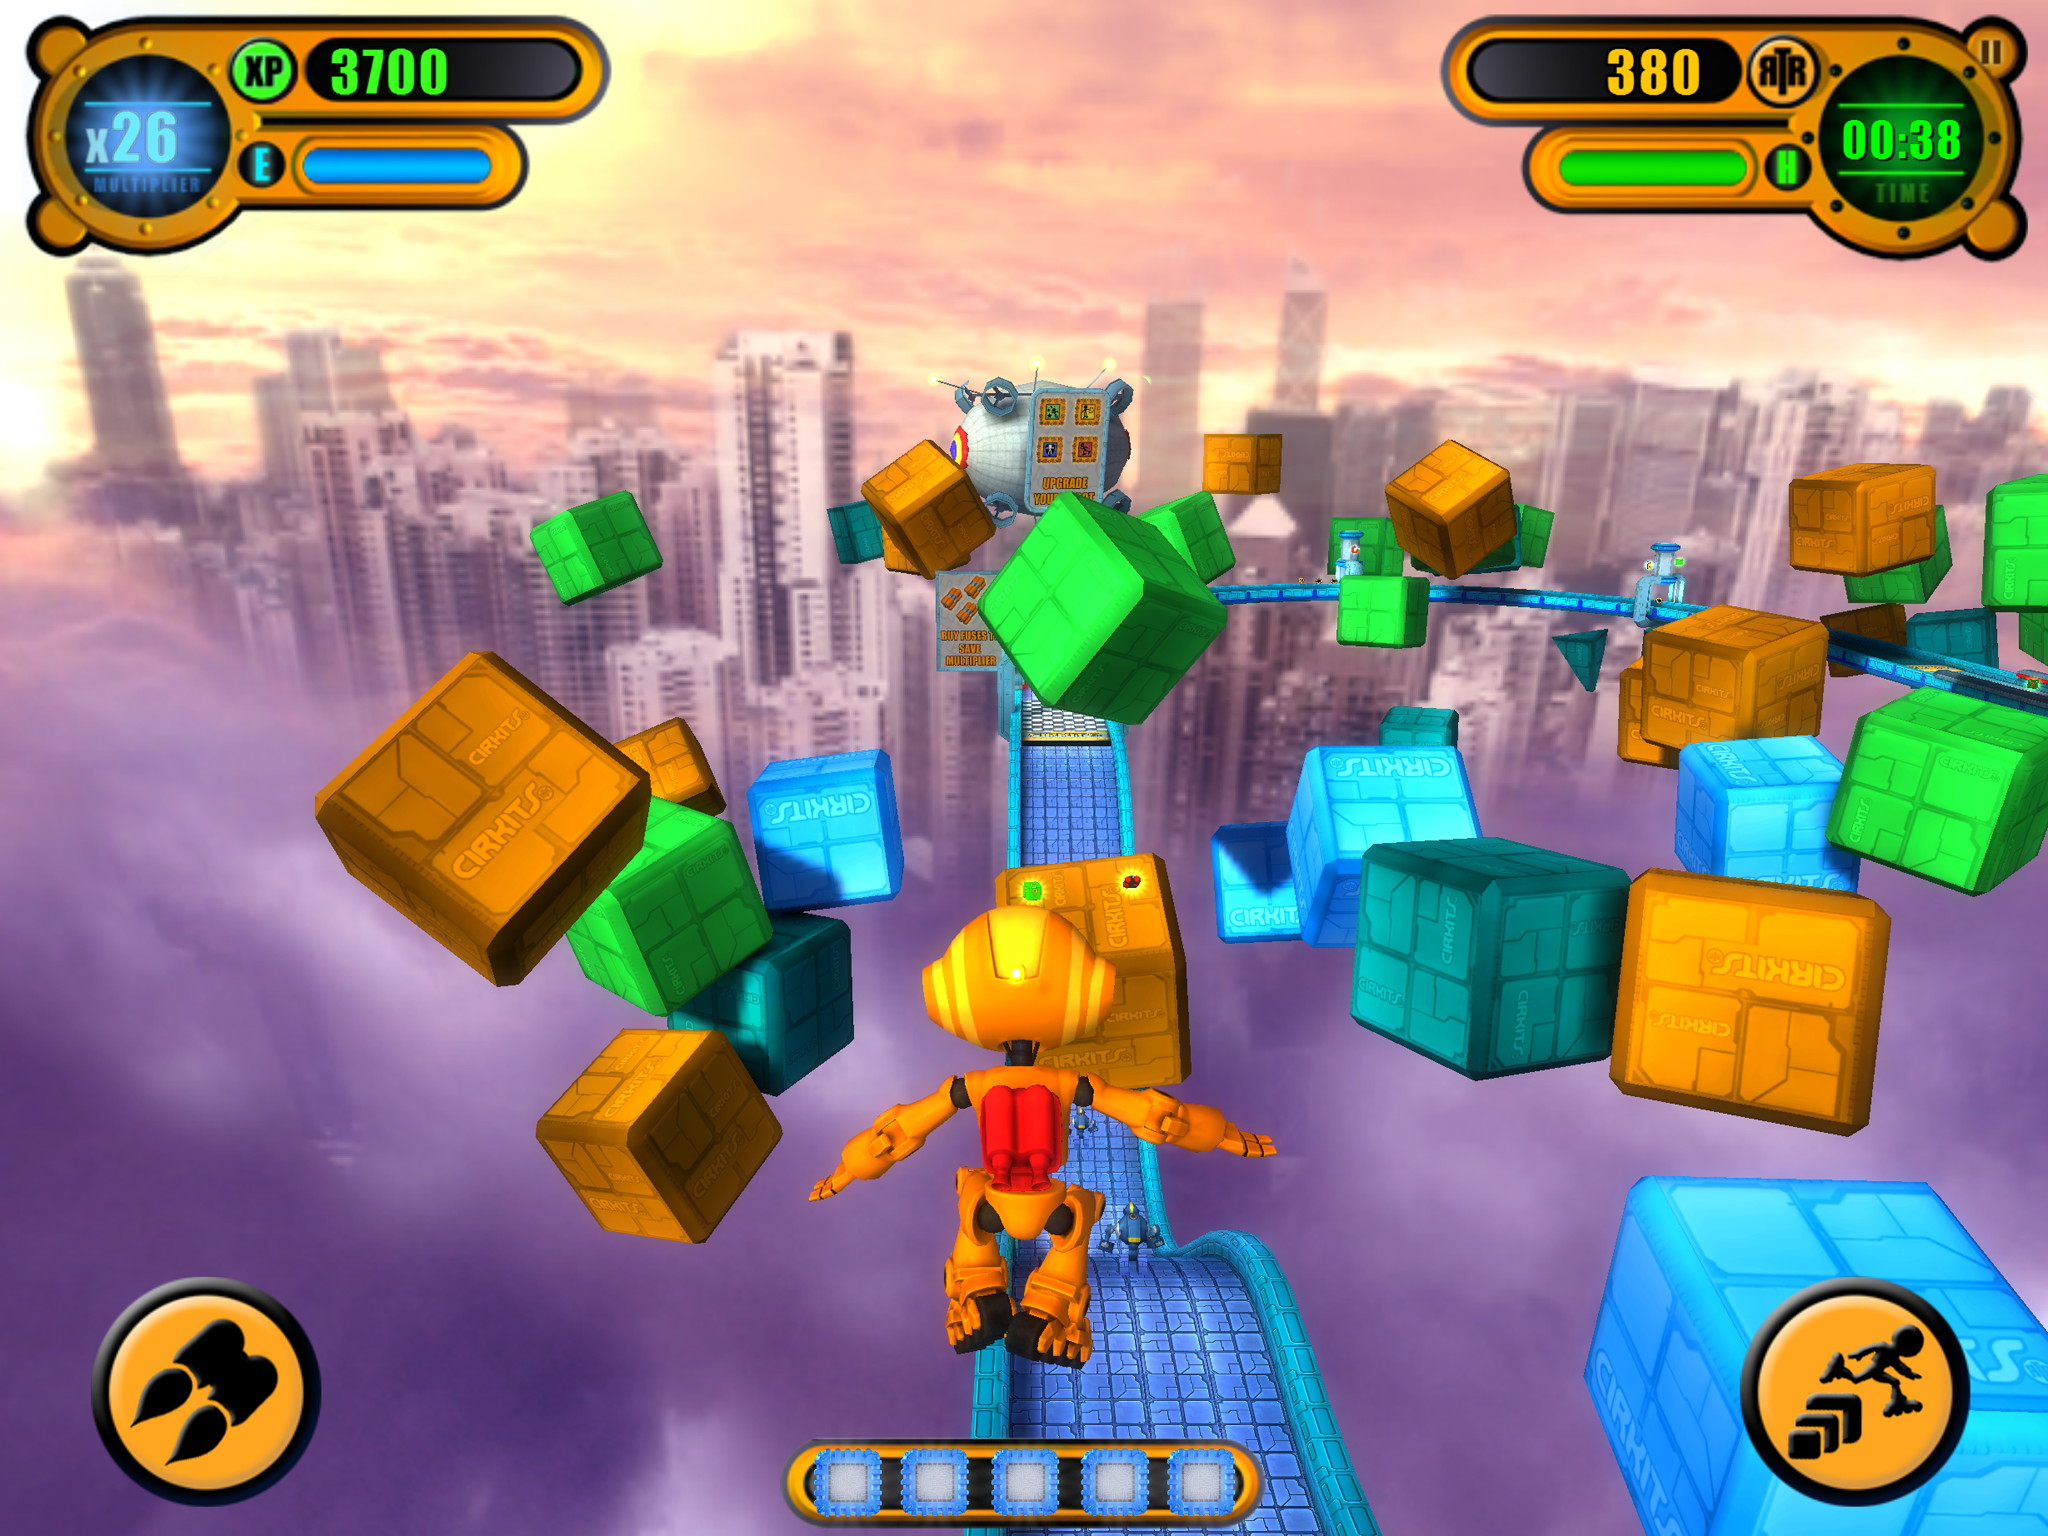 A screenshot of the game taken on iPad 3 using Gizmo Robot